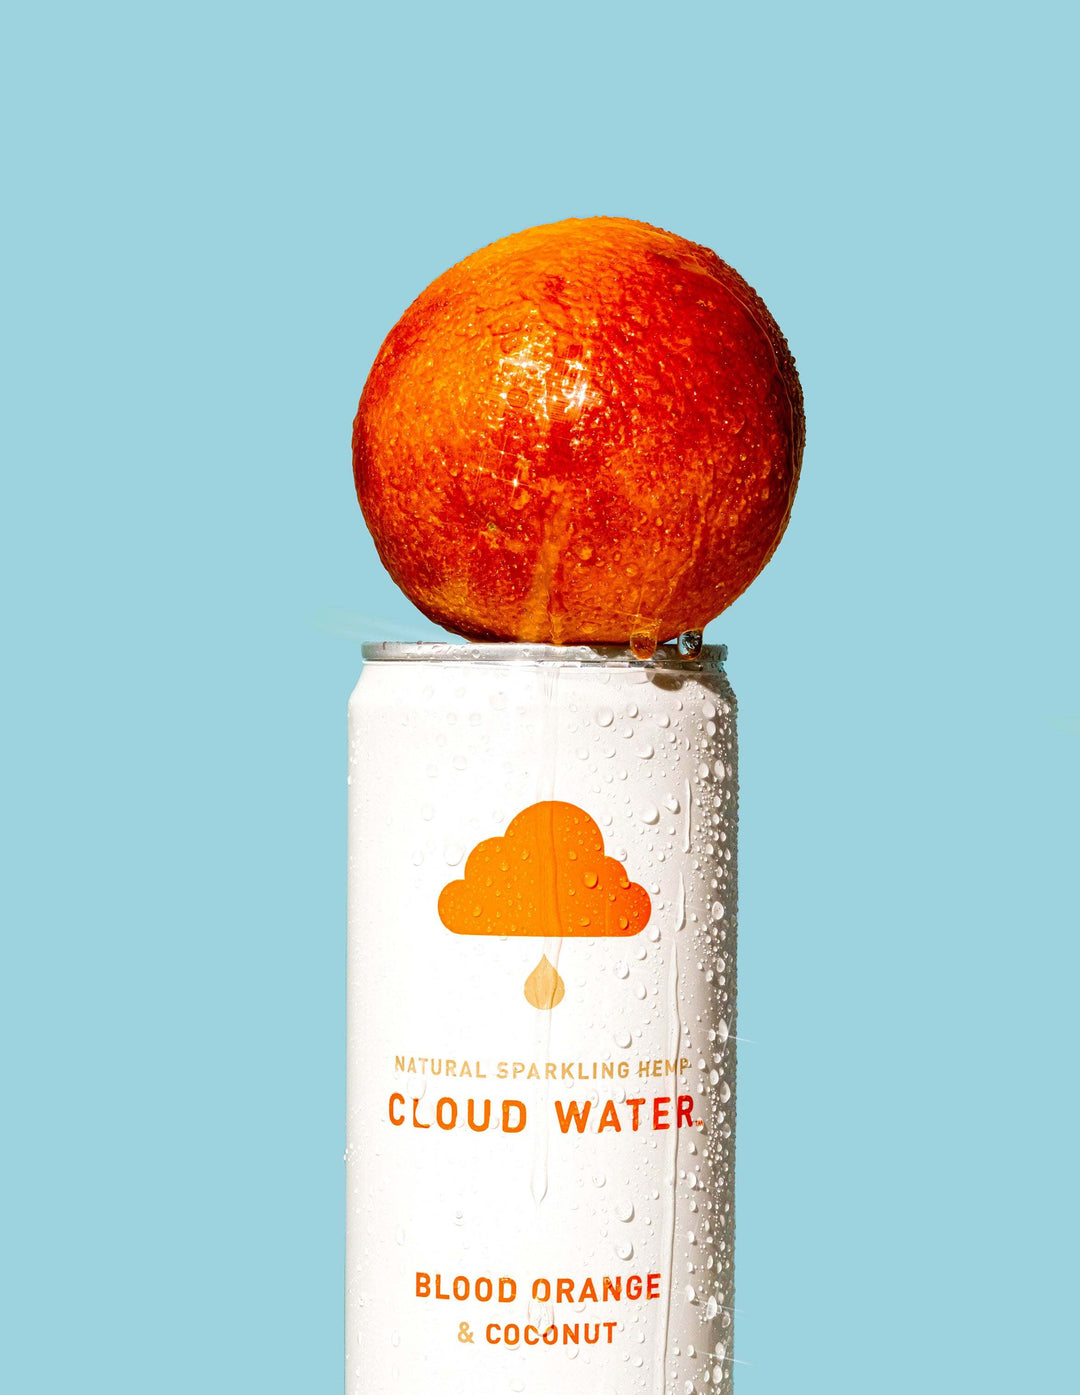 Cloud Water BrandsBlood Orange & Coconut + 25mg CBD (12pk)